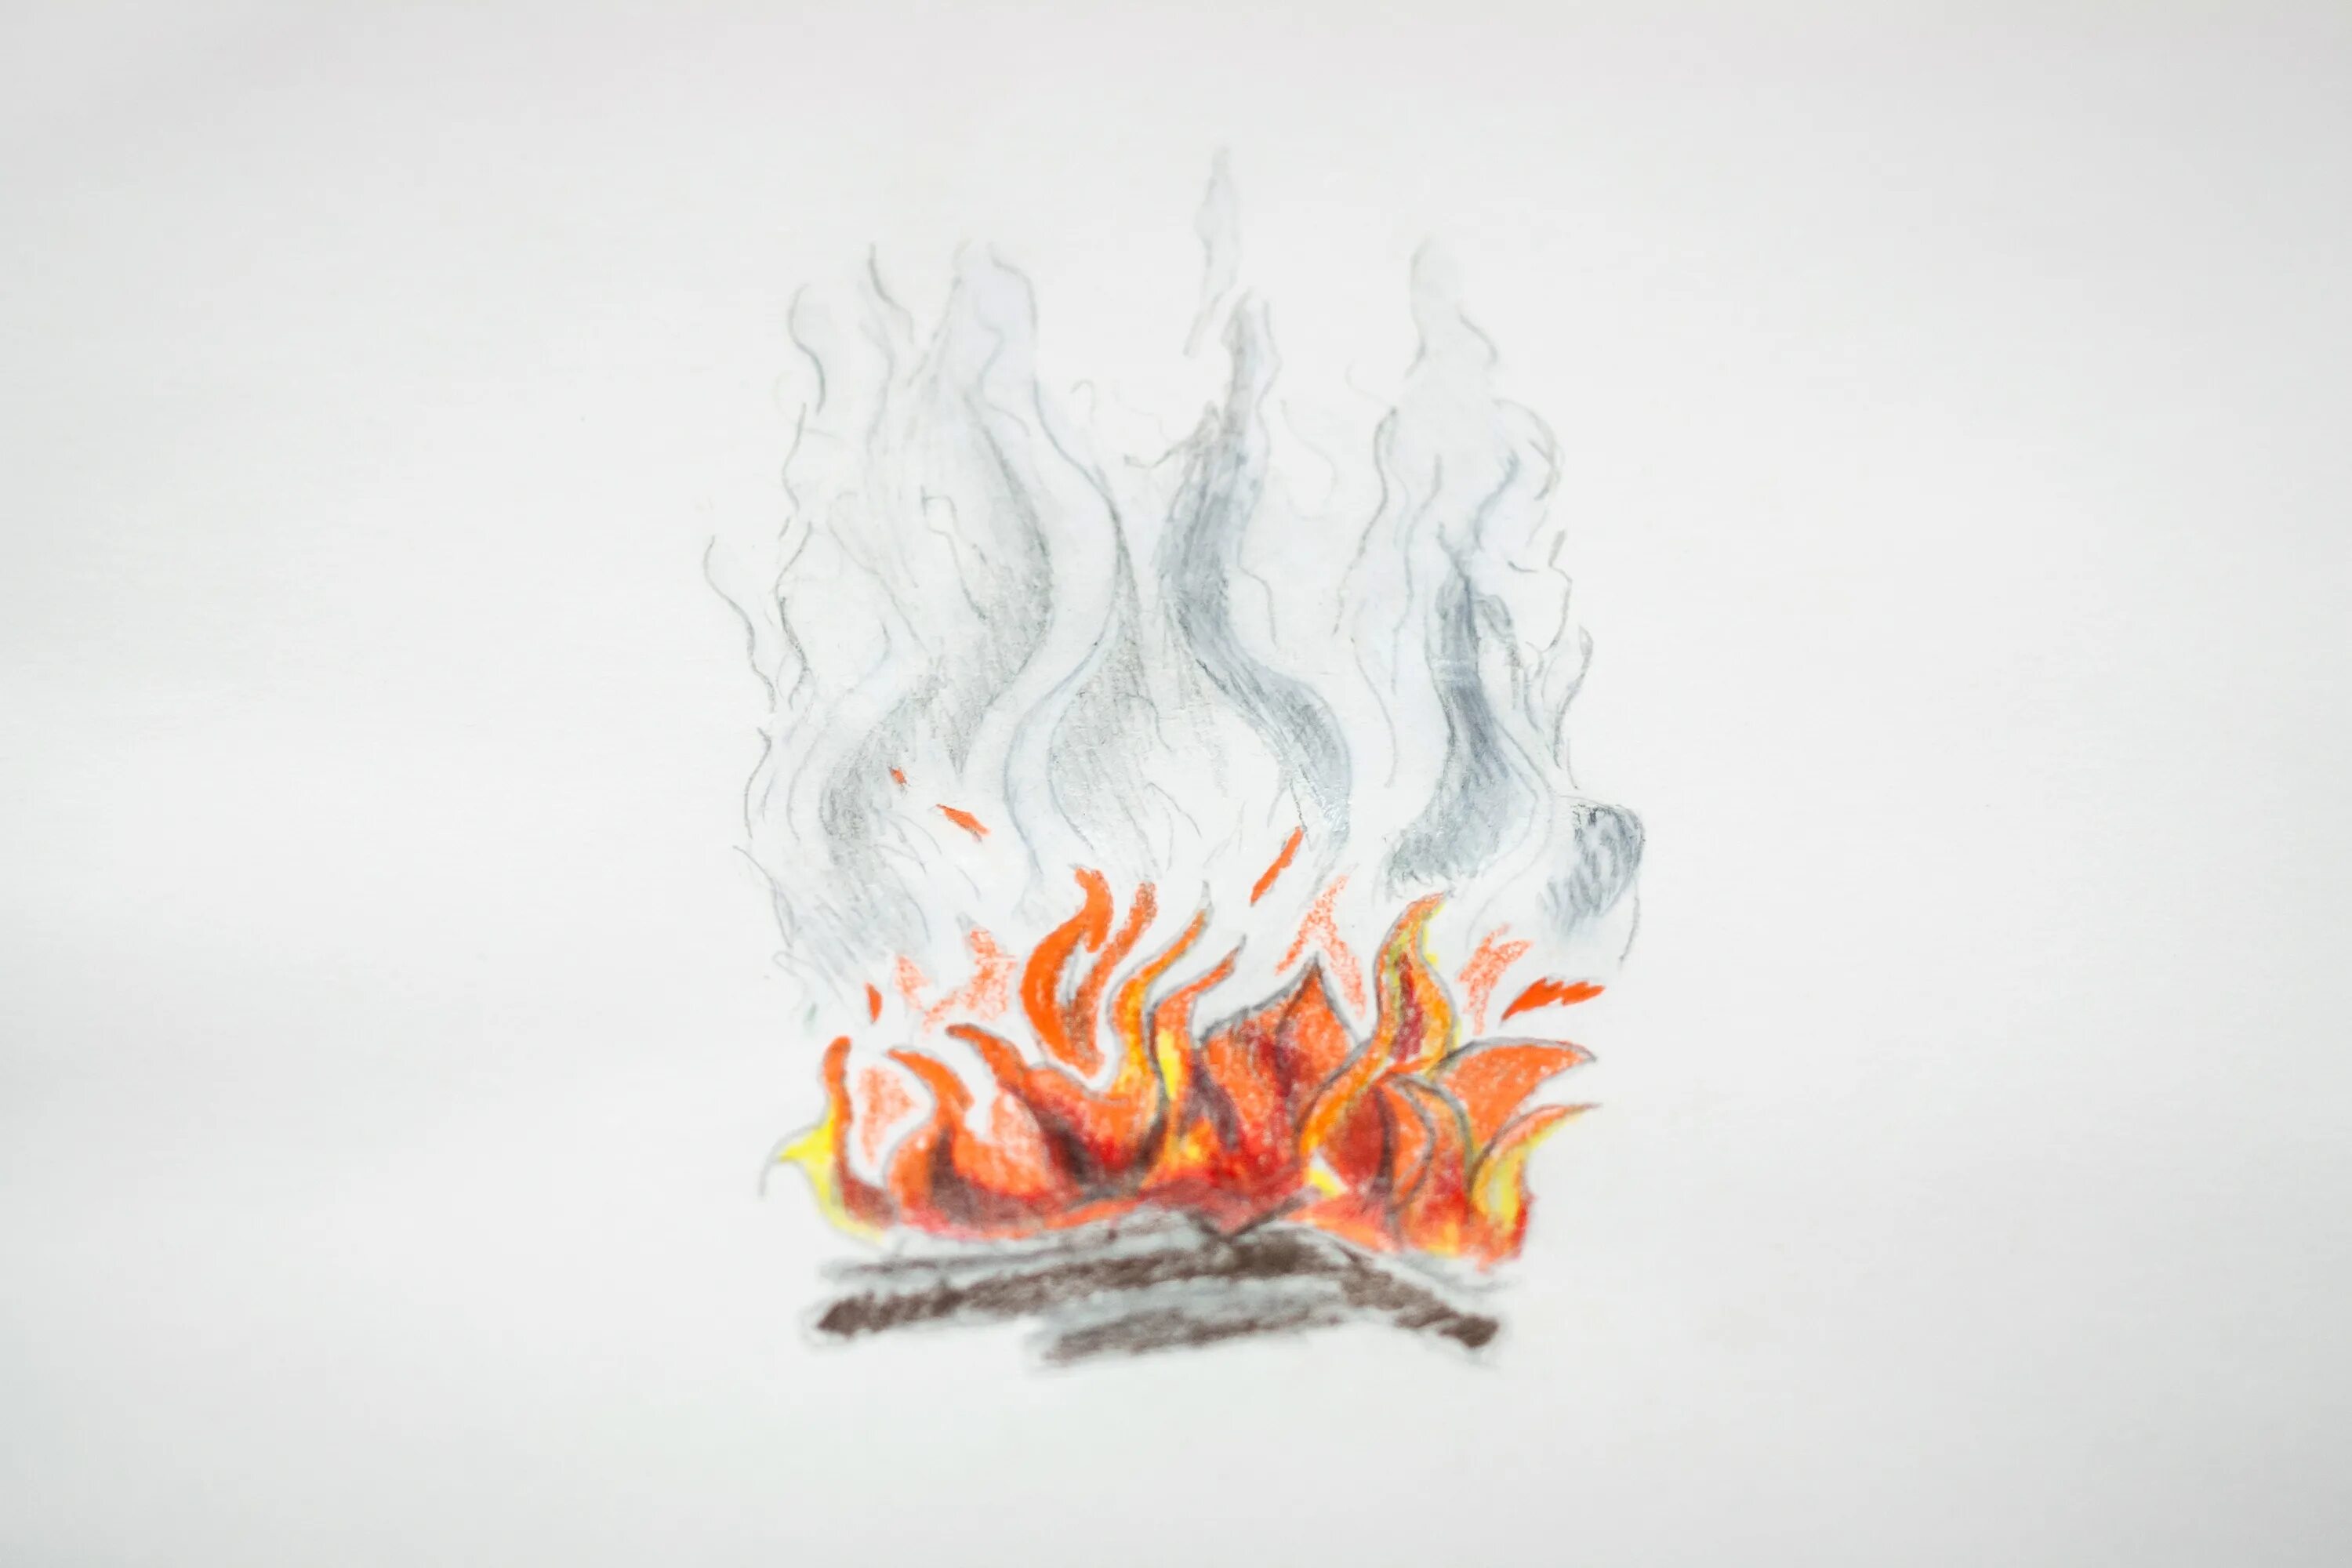 Огонь карандашом. Пламя карандашом. Костёр рисунок карандашом. Рисунок огня пламени карандашом. Рисунок нарисованного огня